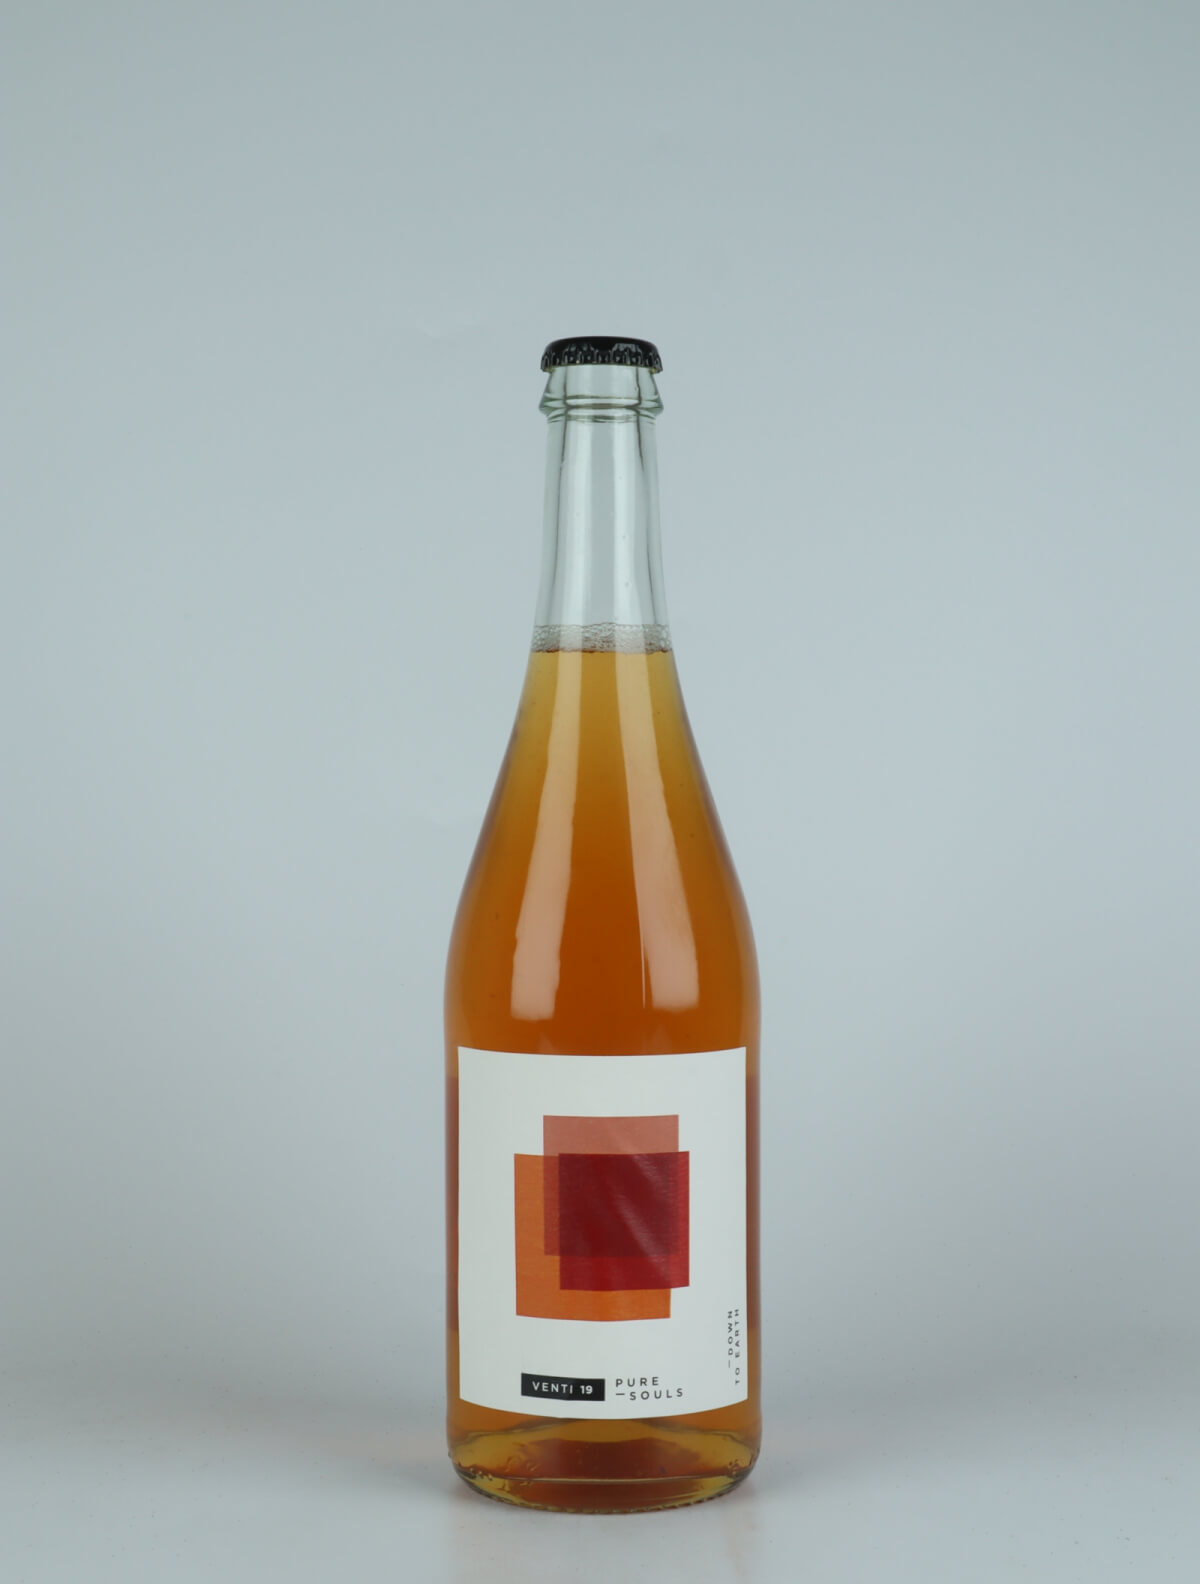 En flaske 2019 Pure Souls Orange vin fra do.t.e Vini, Toscana i Italien